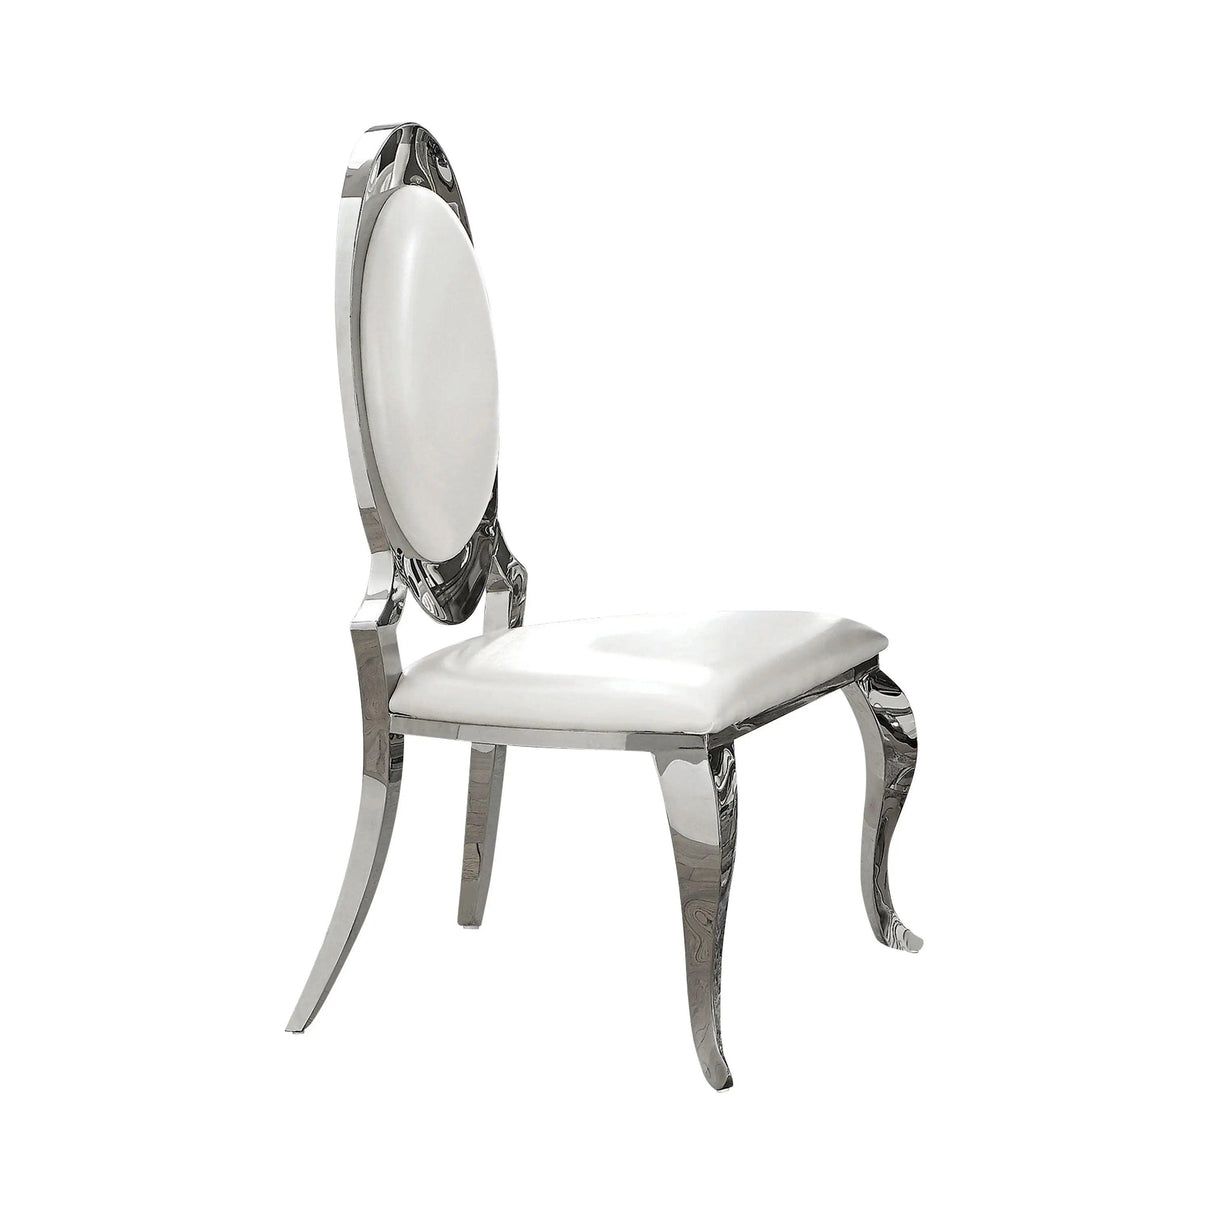 Antoine 5-Piece Rectangular Dining Set By Coaster Furniture - Chrome - Home Elegance USA